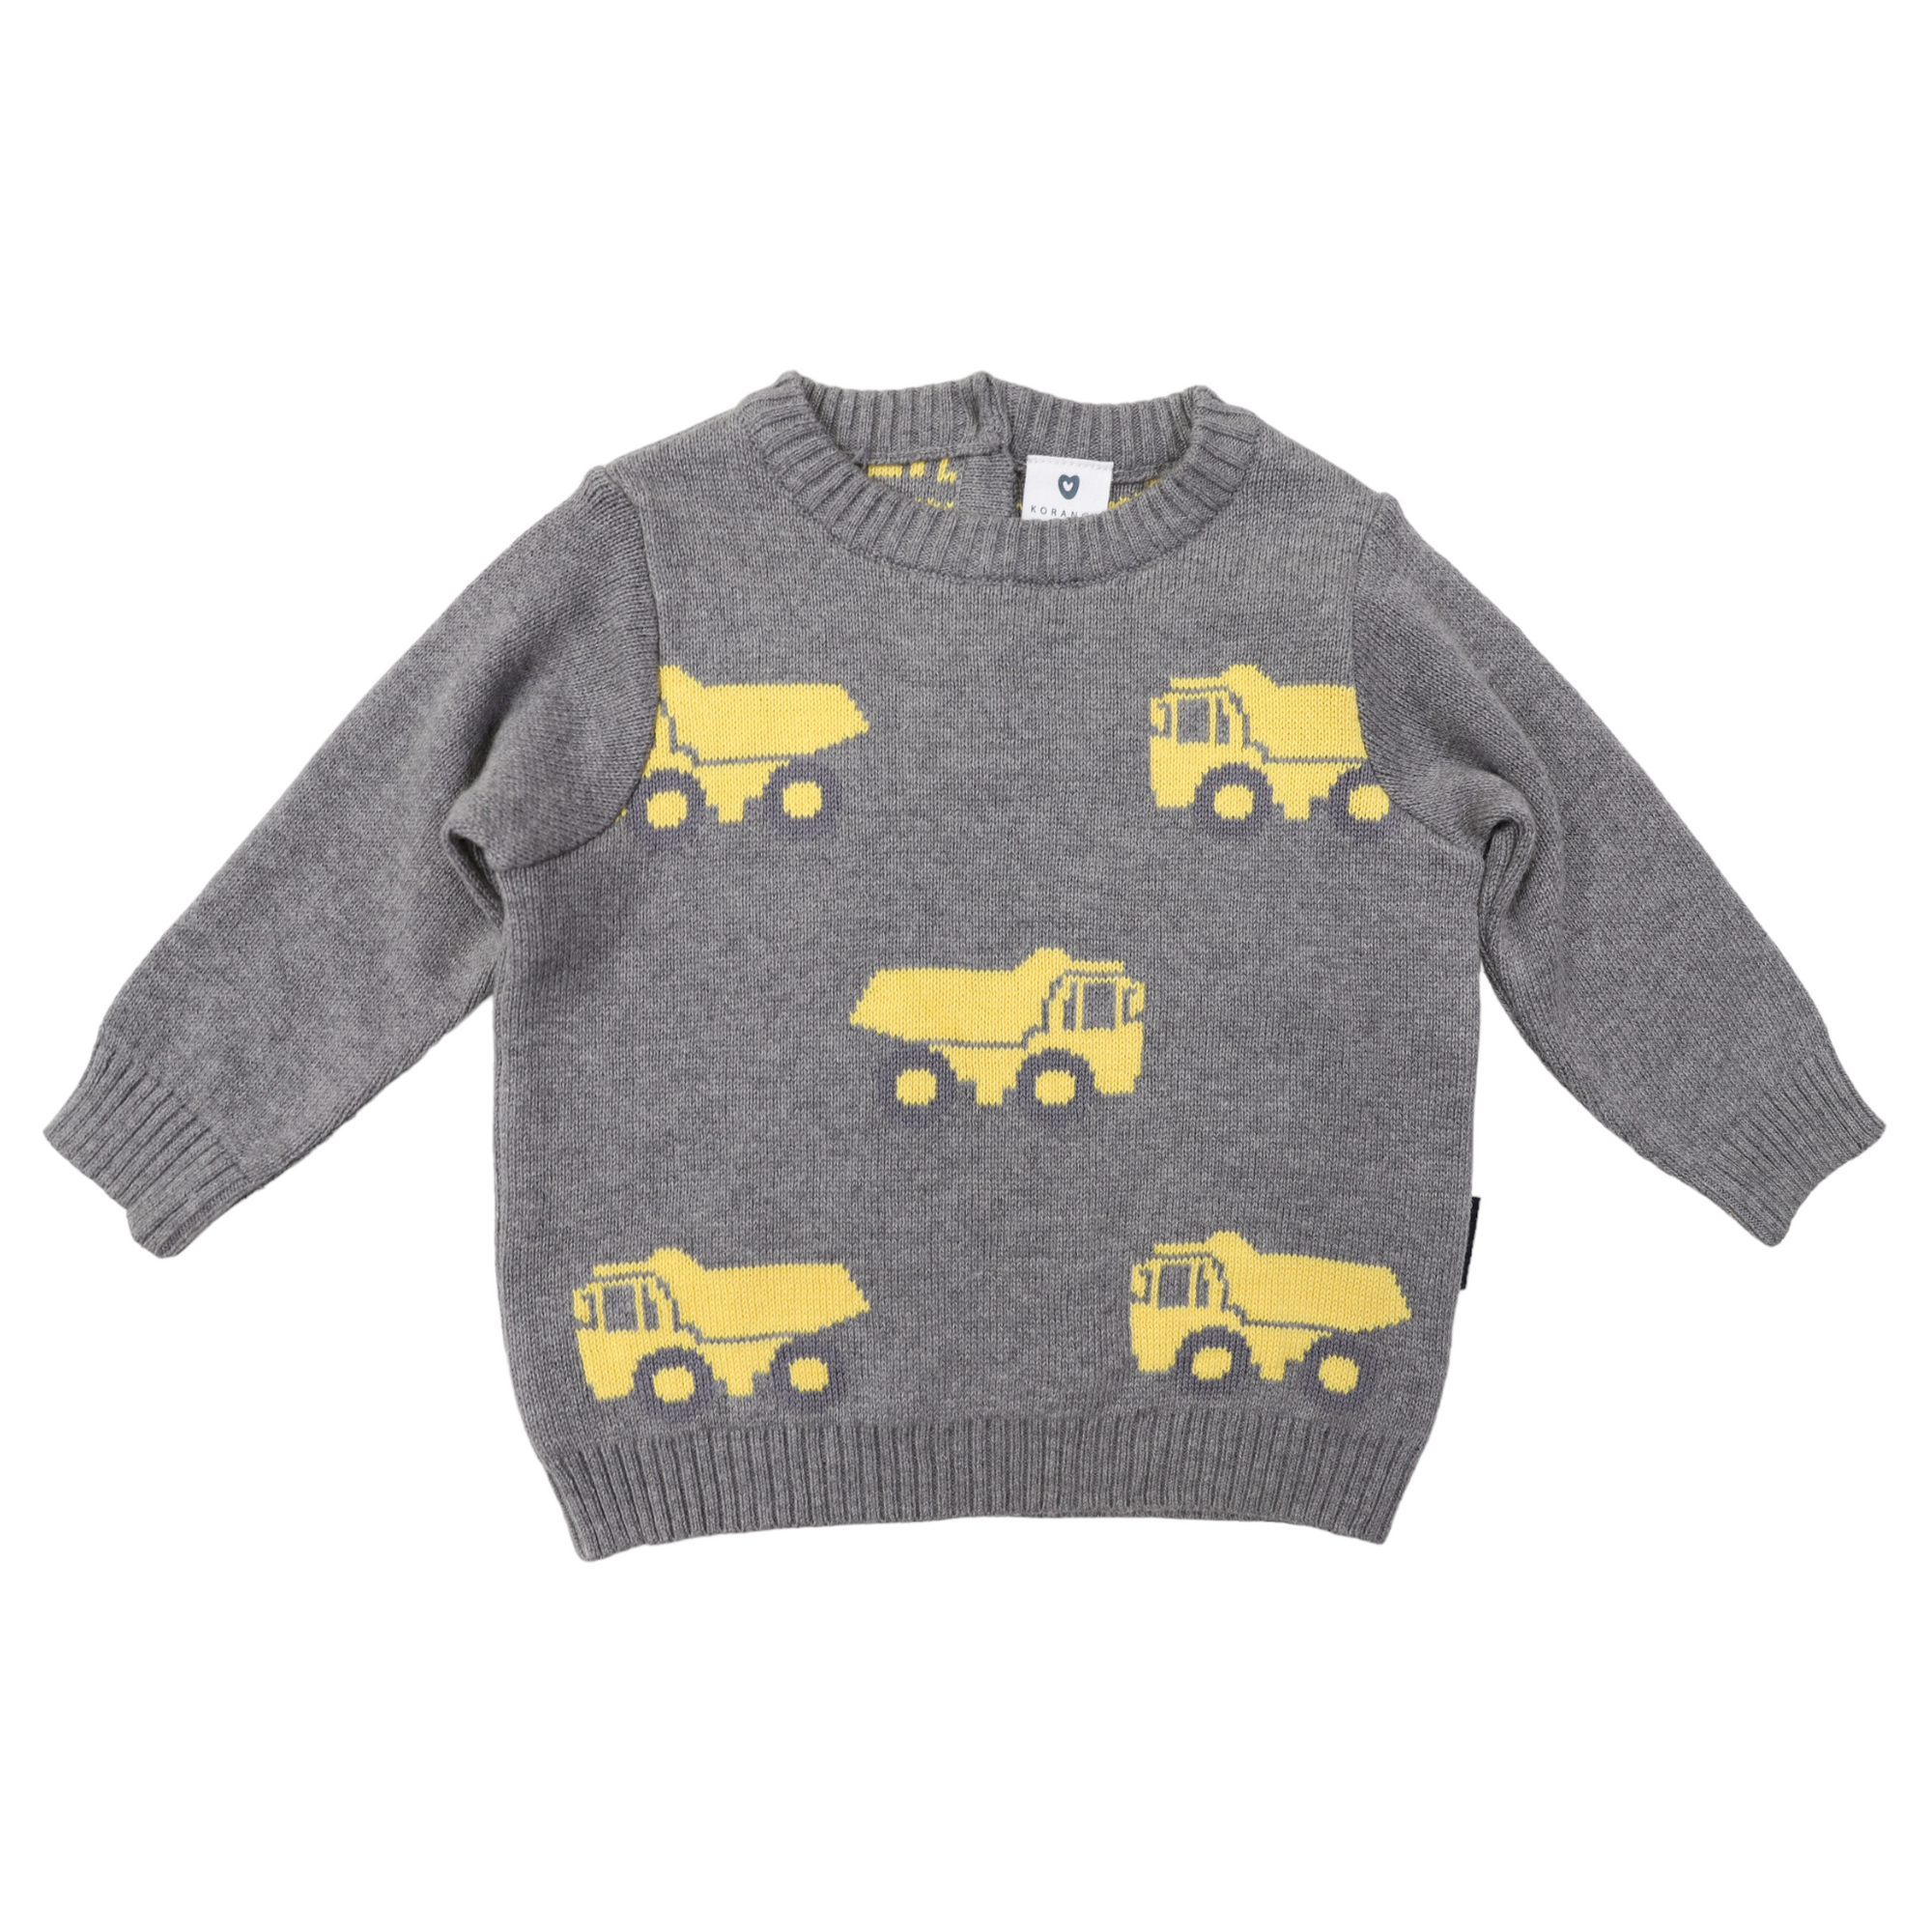 Korango Tip Truck Knit Sweater - Charcoal